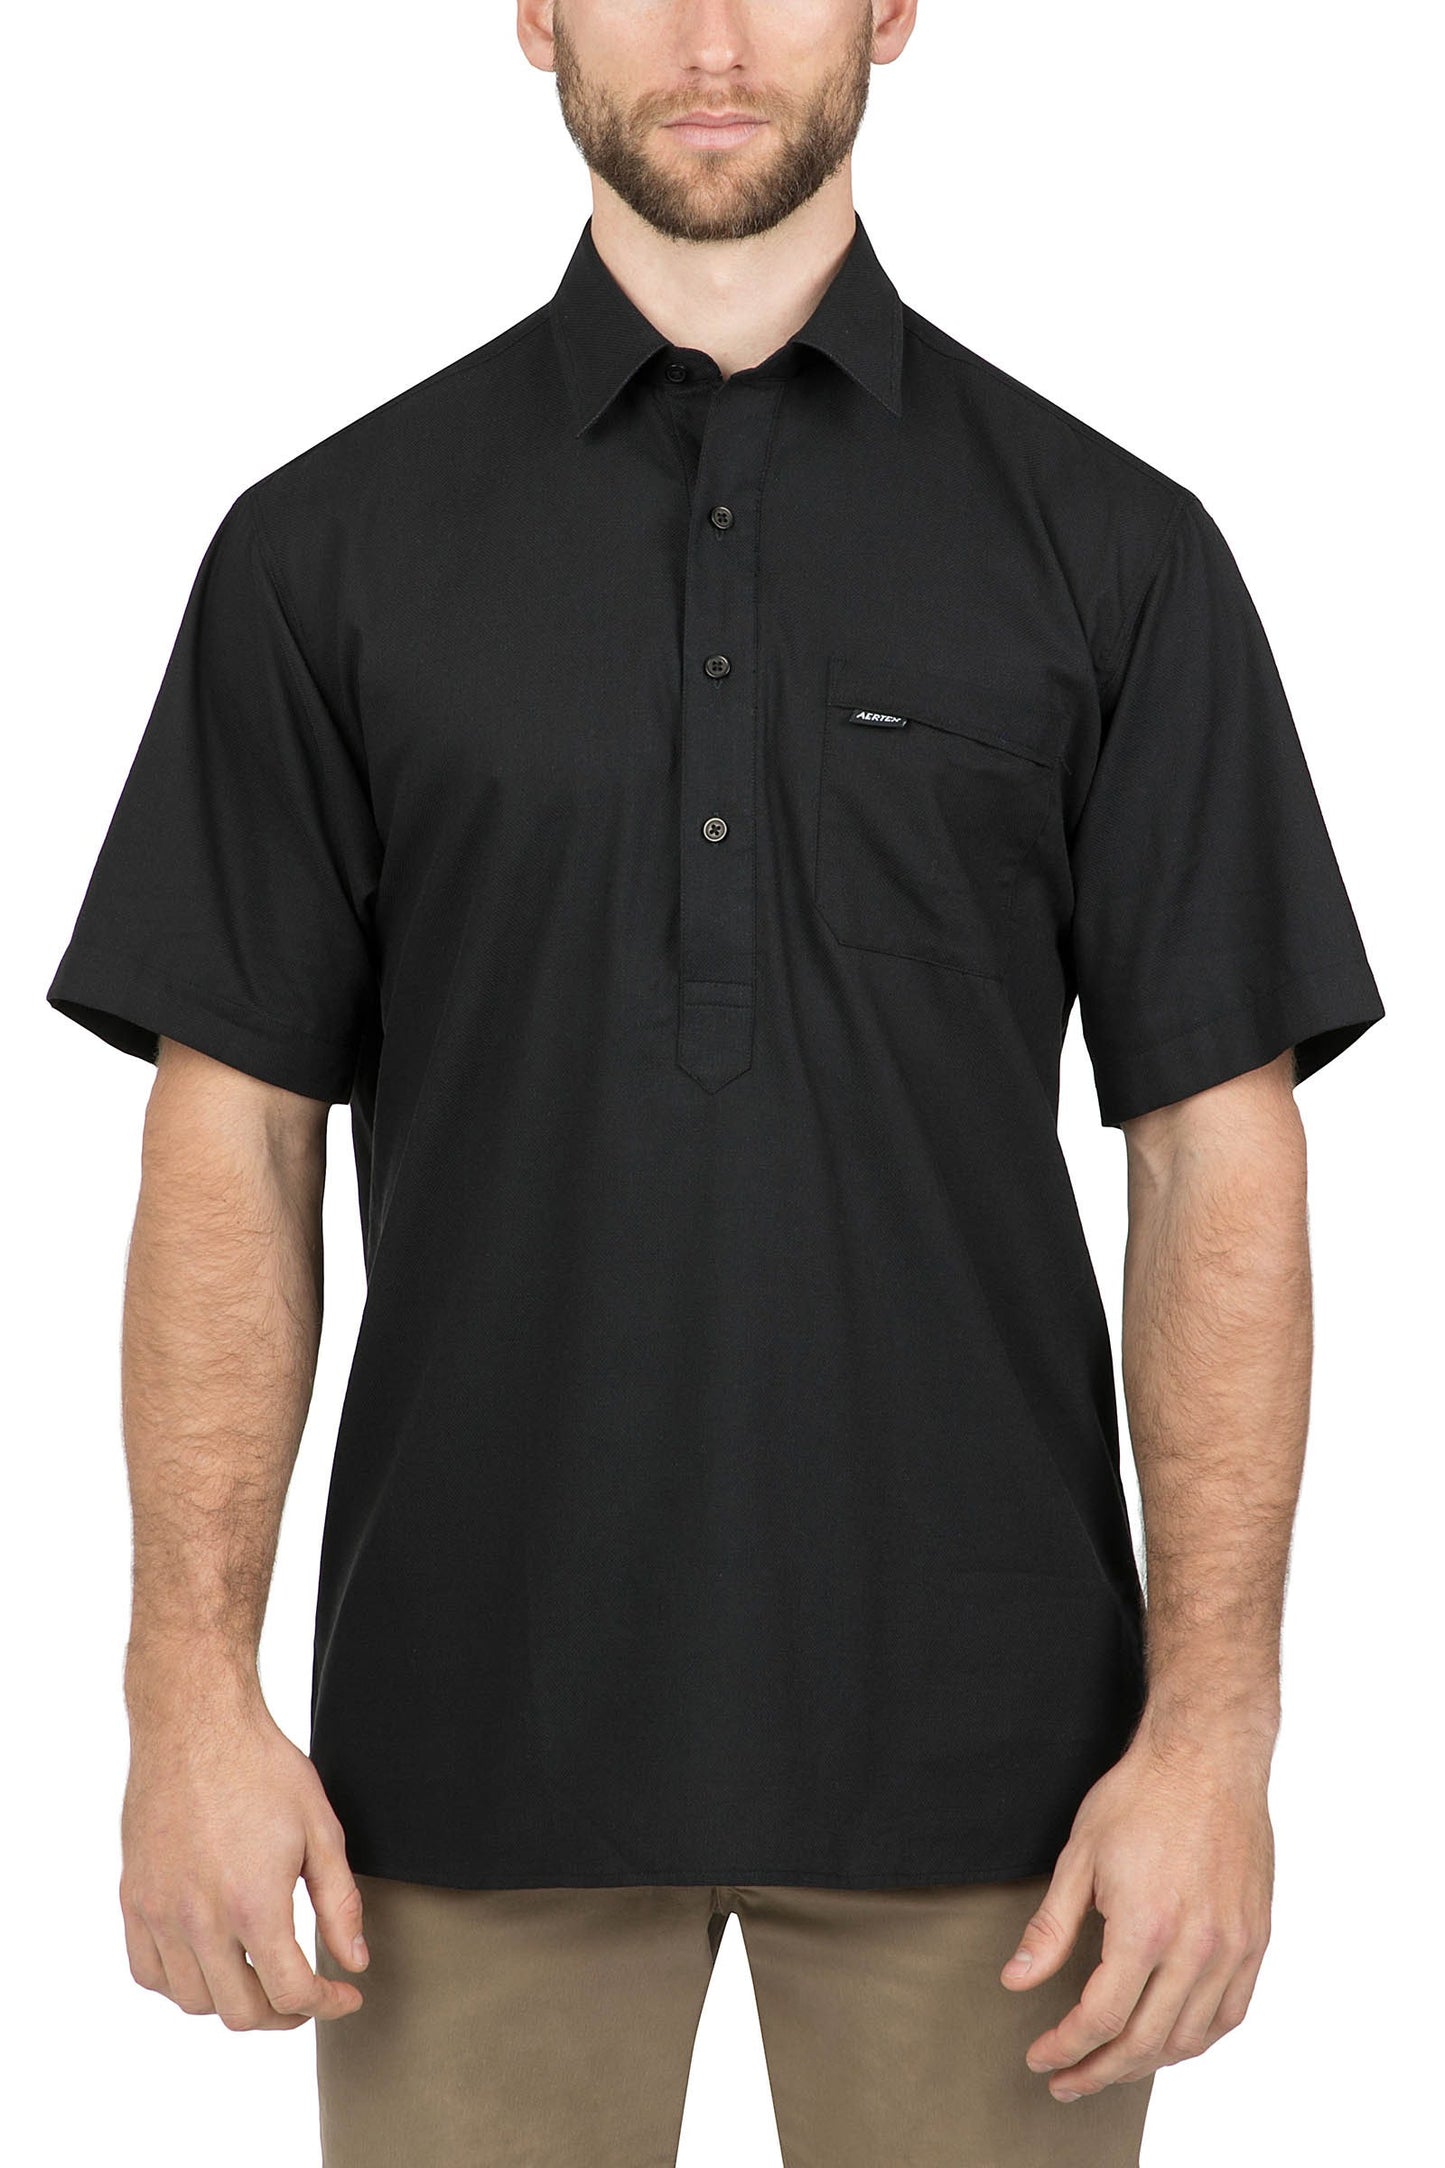 Aertex Taunton Plain Coloured Short Sleeve Polo Shirt